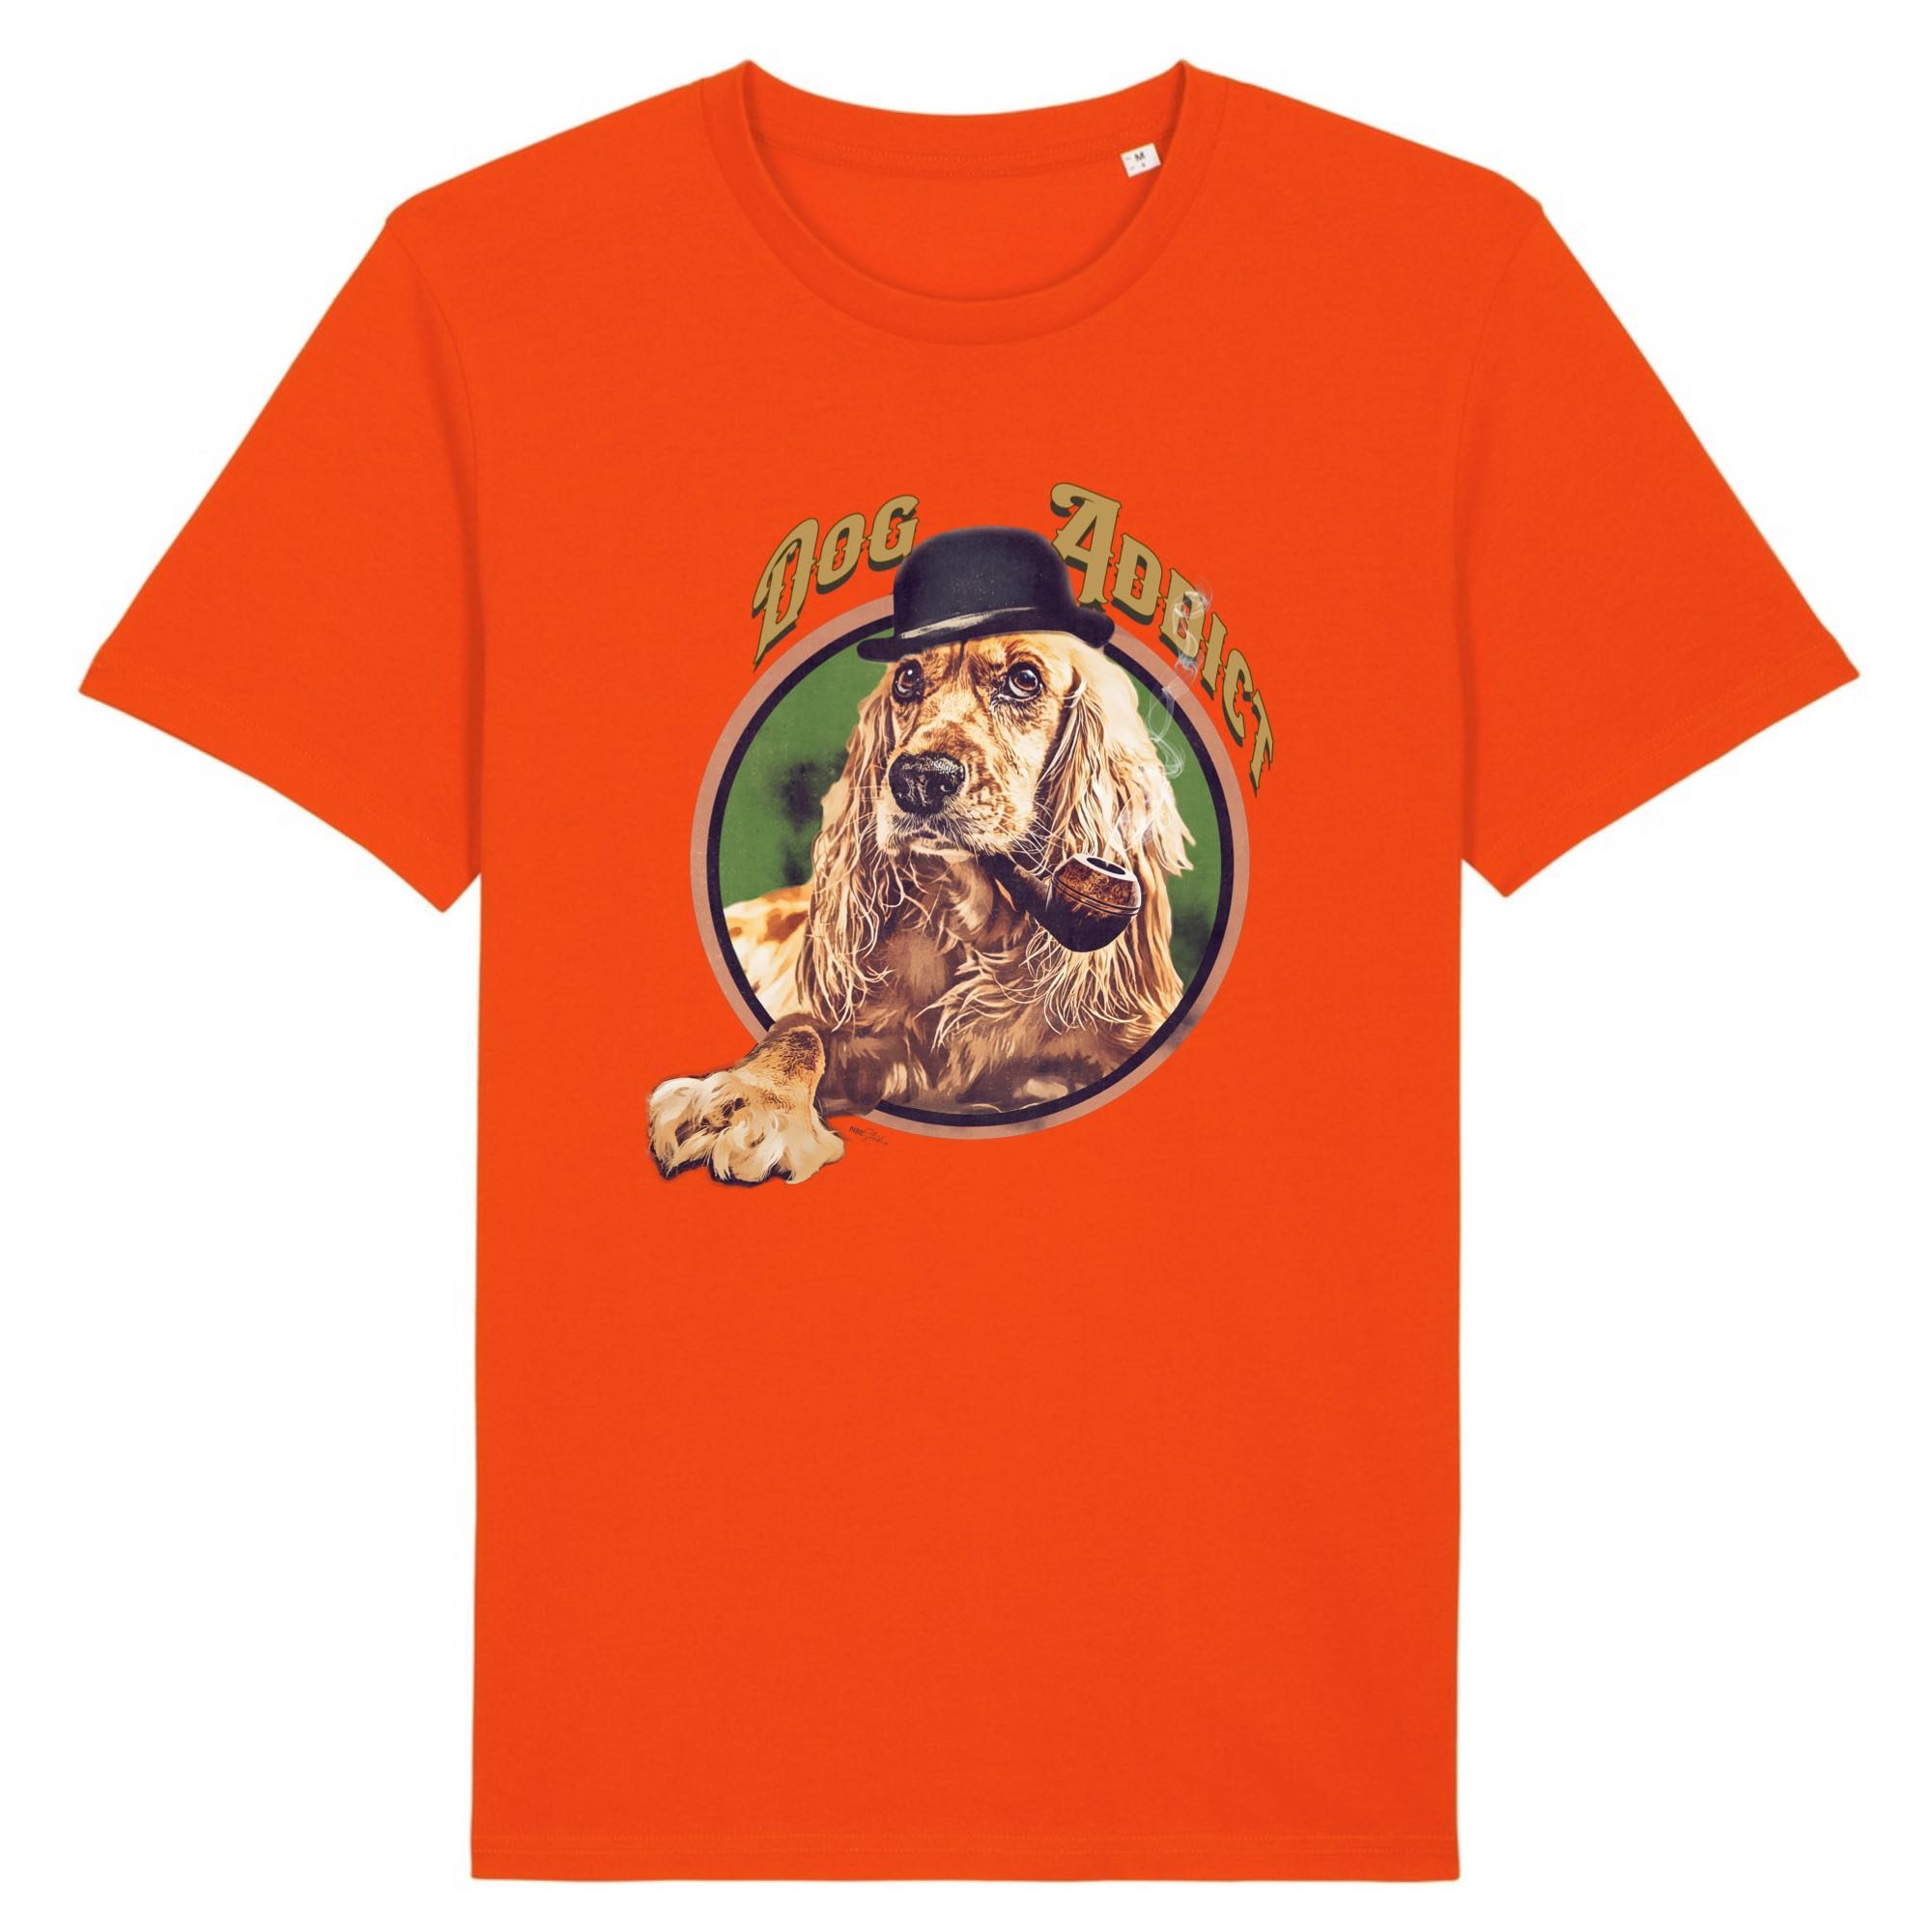 T-shirt Unisexe "DOG ADDICT" Cocker 100% Coton BIO